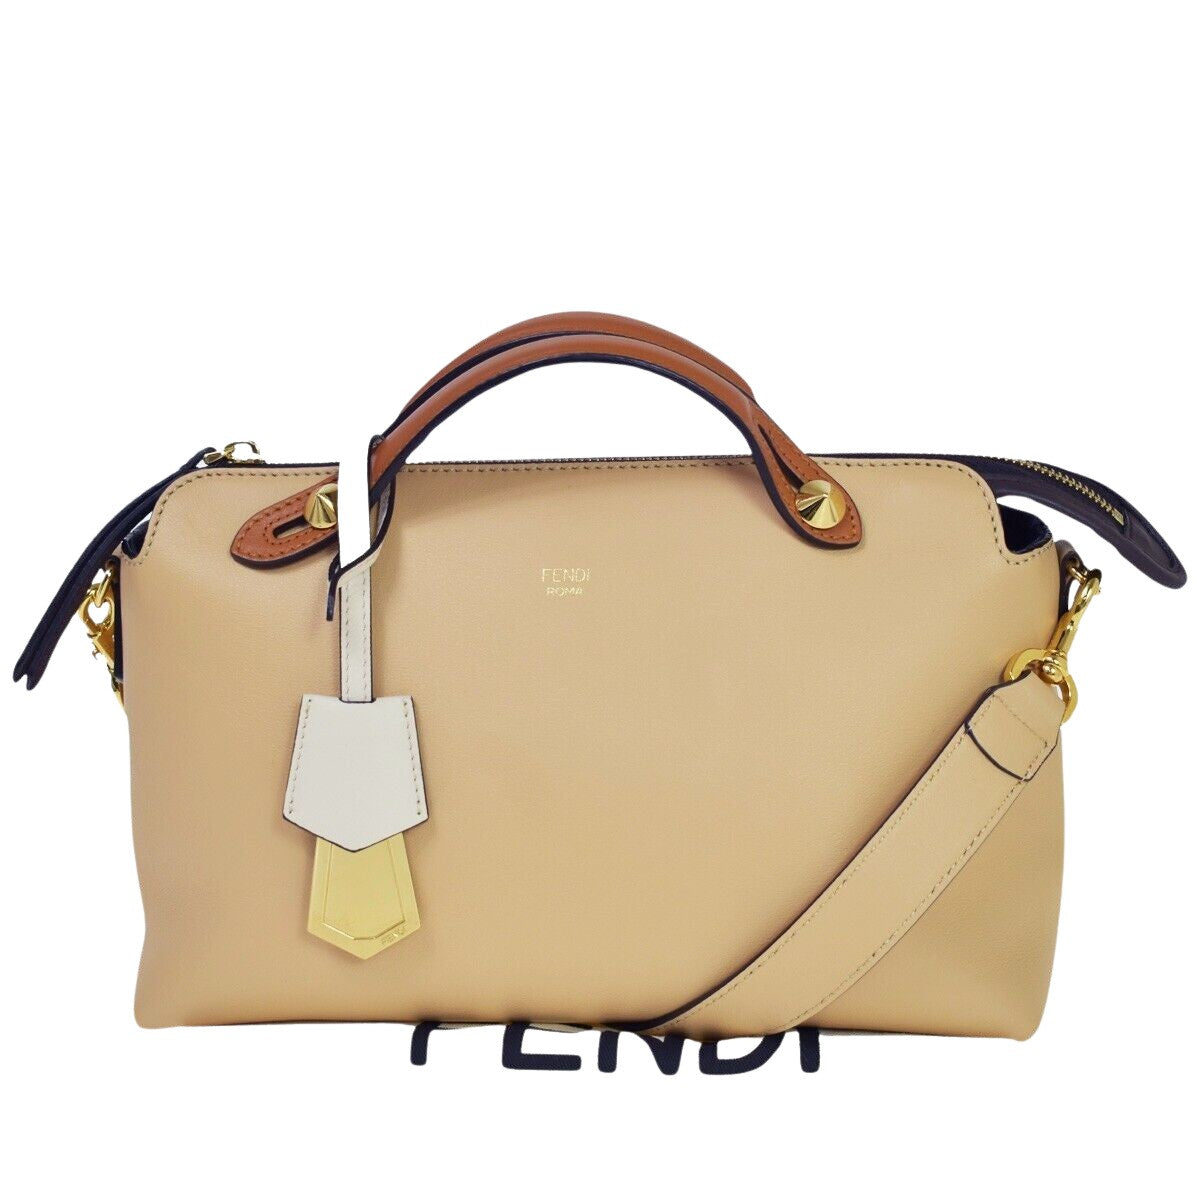 Fendi Pre-owned Leather Handbag